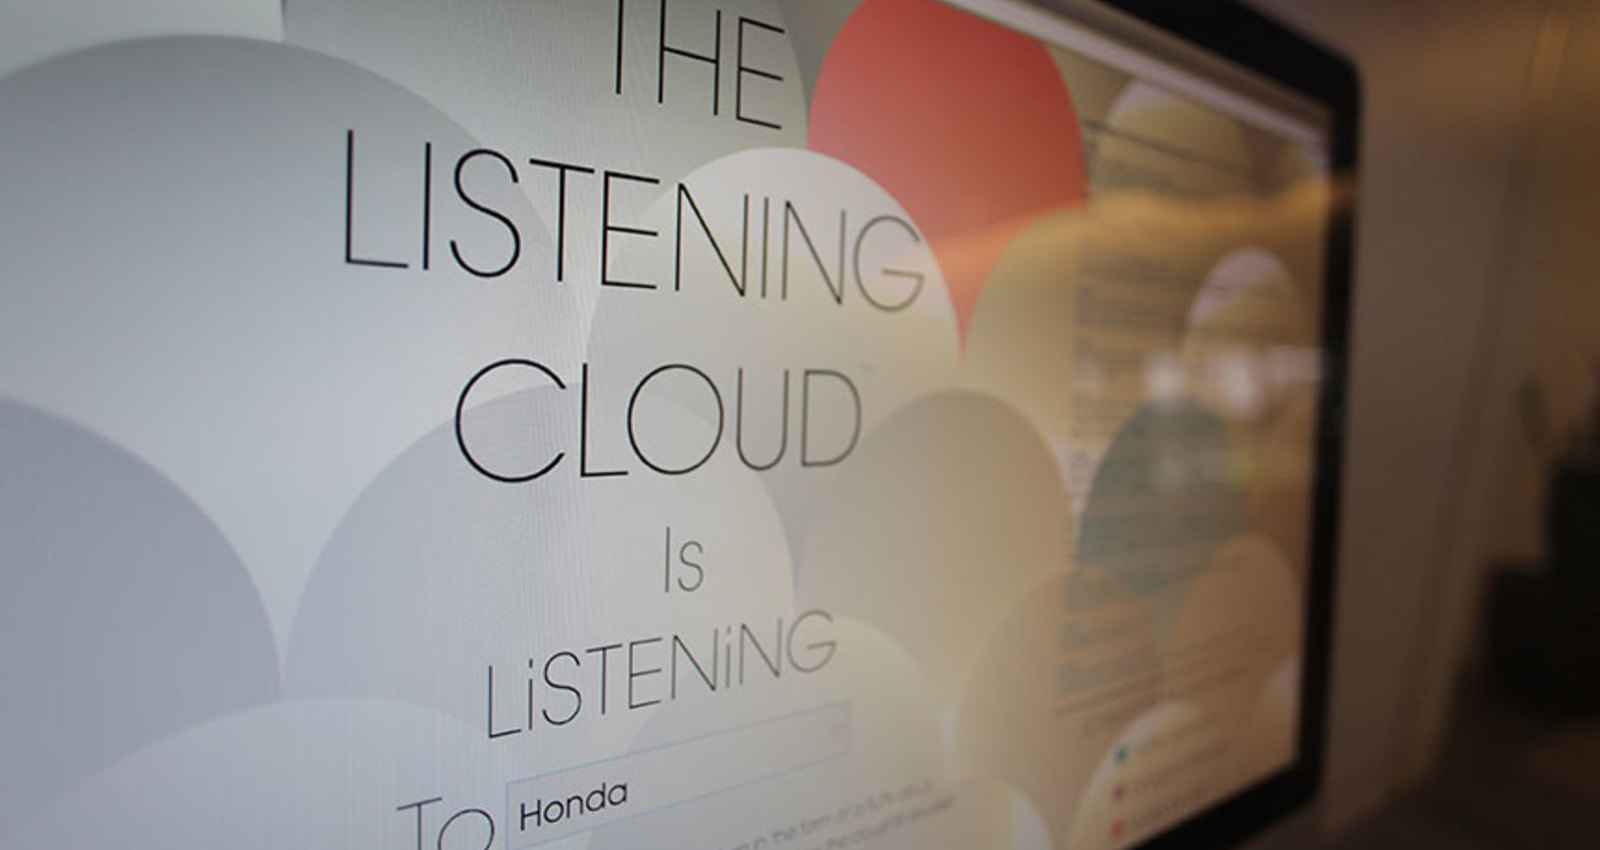 The Listening Cloud